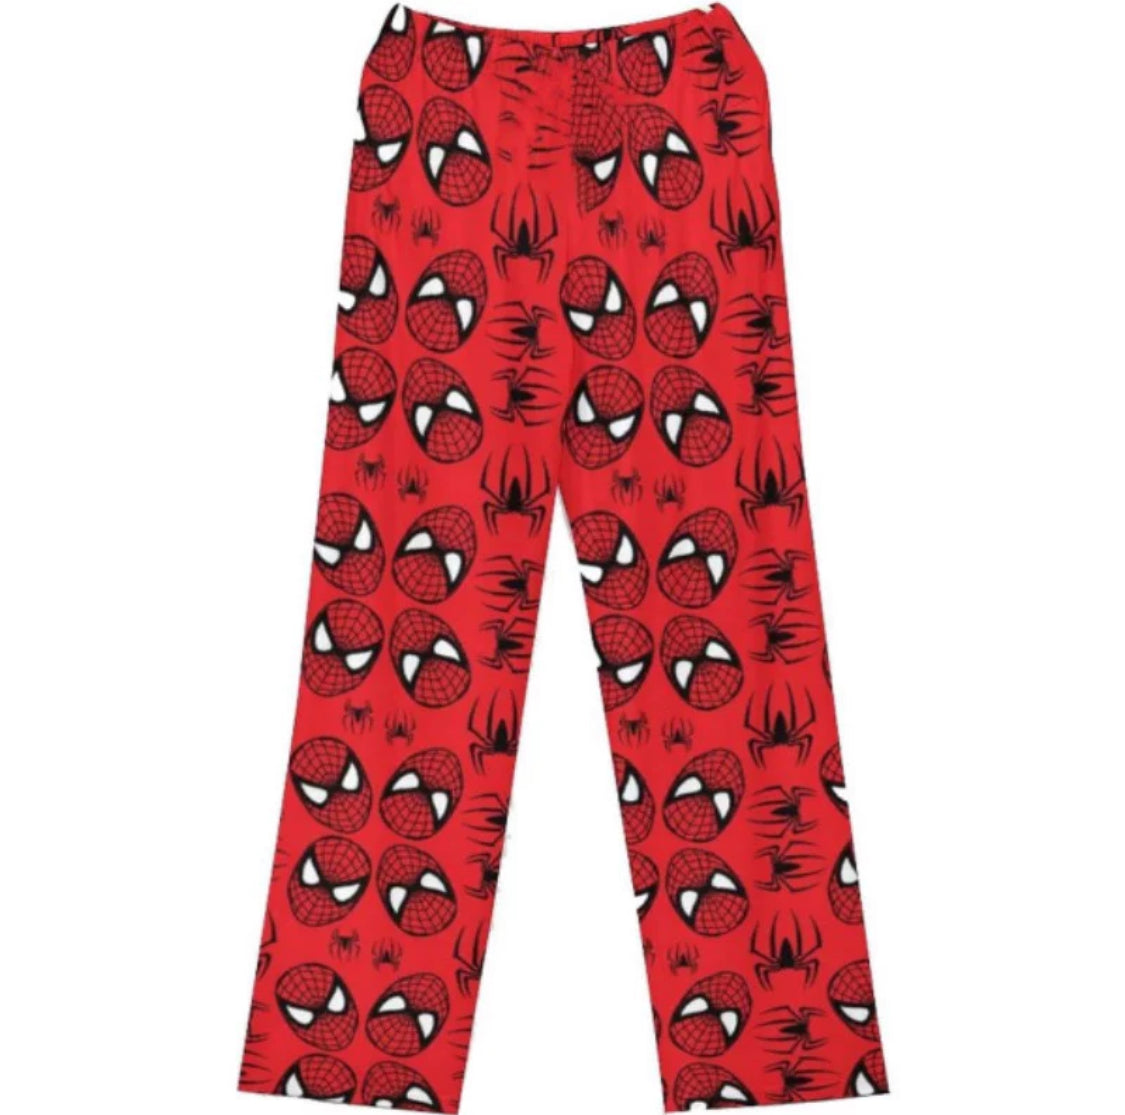 Spider Man Pants